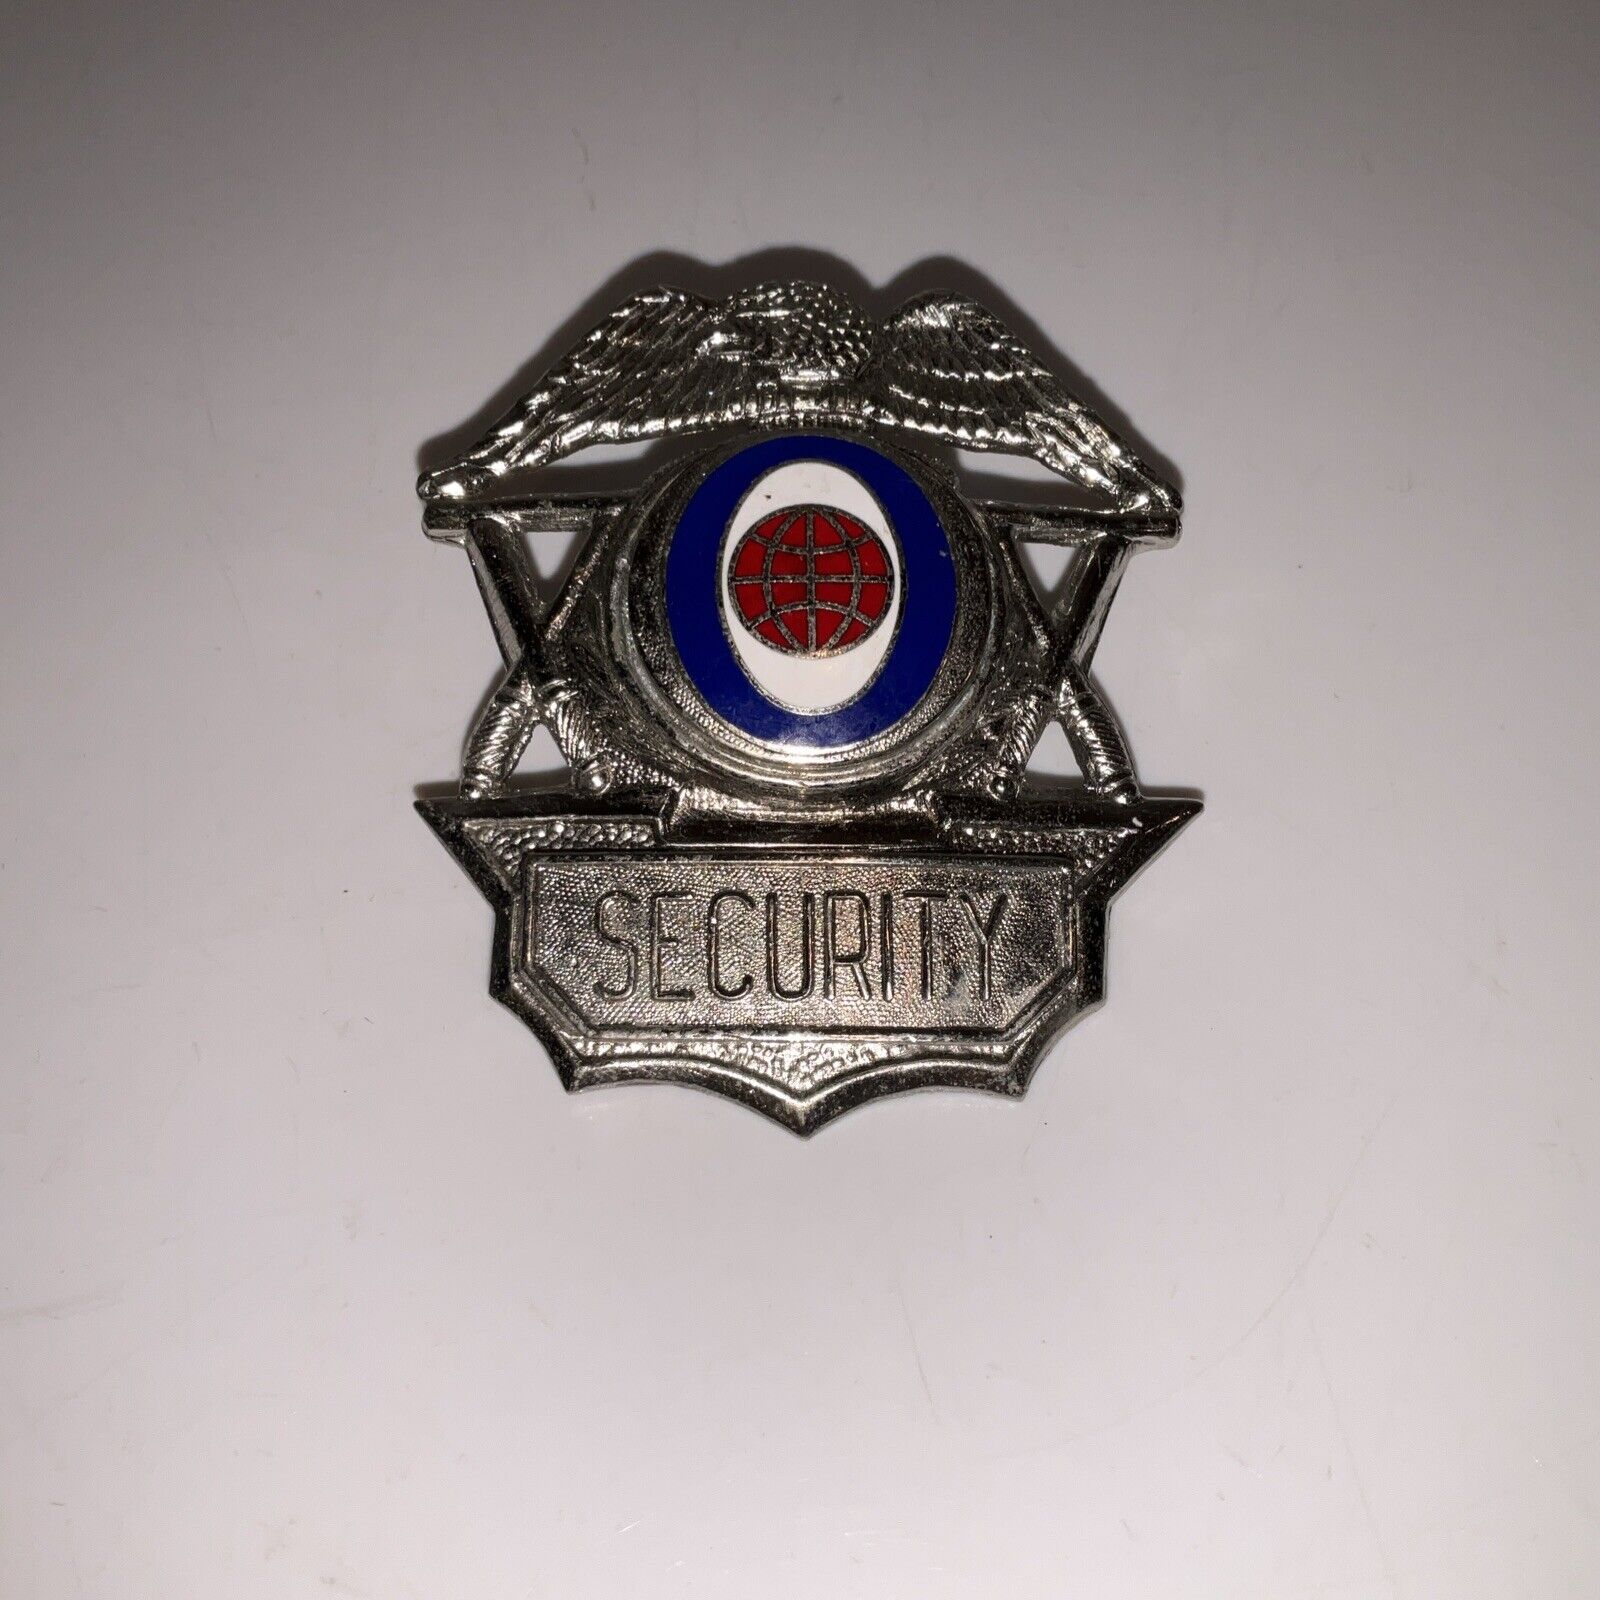 OBSOLETE Vintage SECURITY Badge Pin